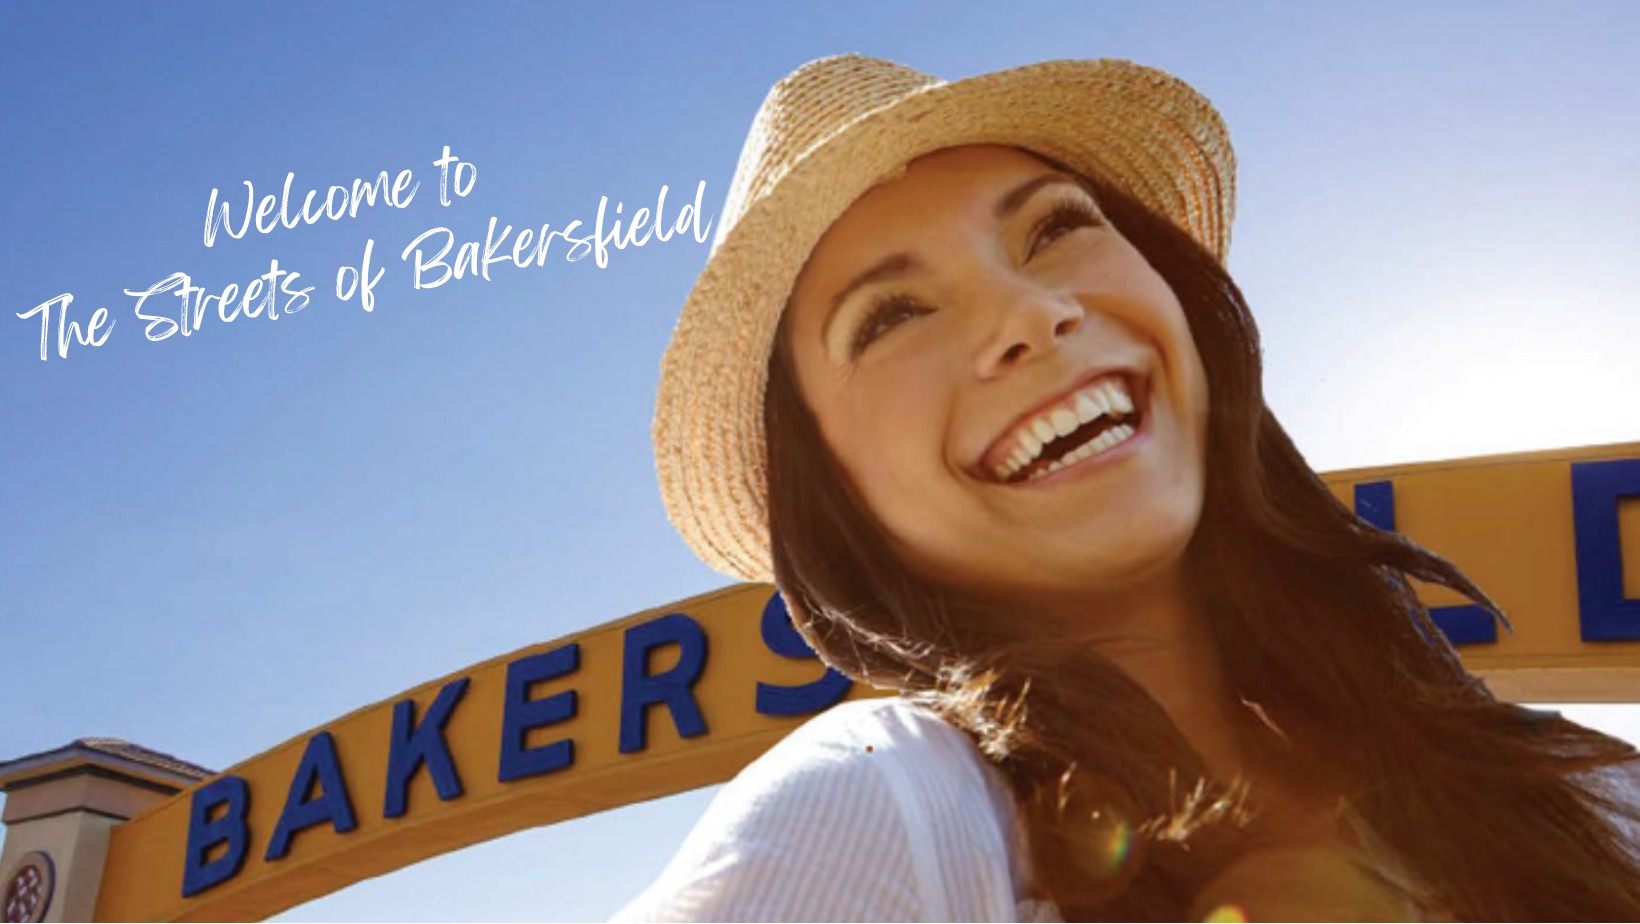 Bakersfield Convention & Visitors Bureau